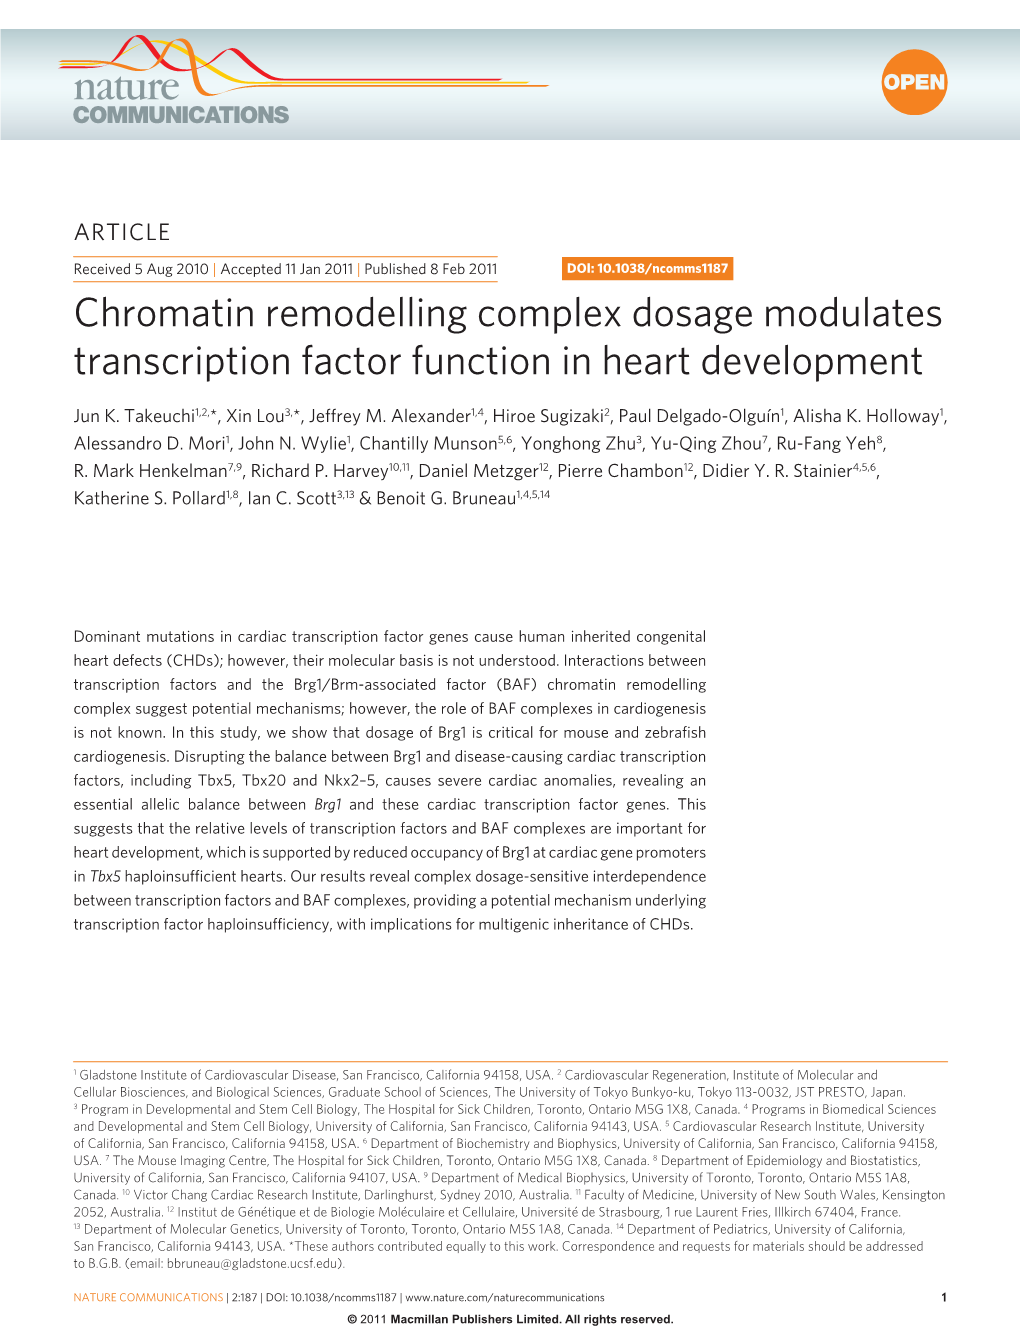 Chromatin Remodelling Complex Dosage Modulates Transcription Factor Function in Heart Development